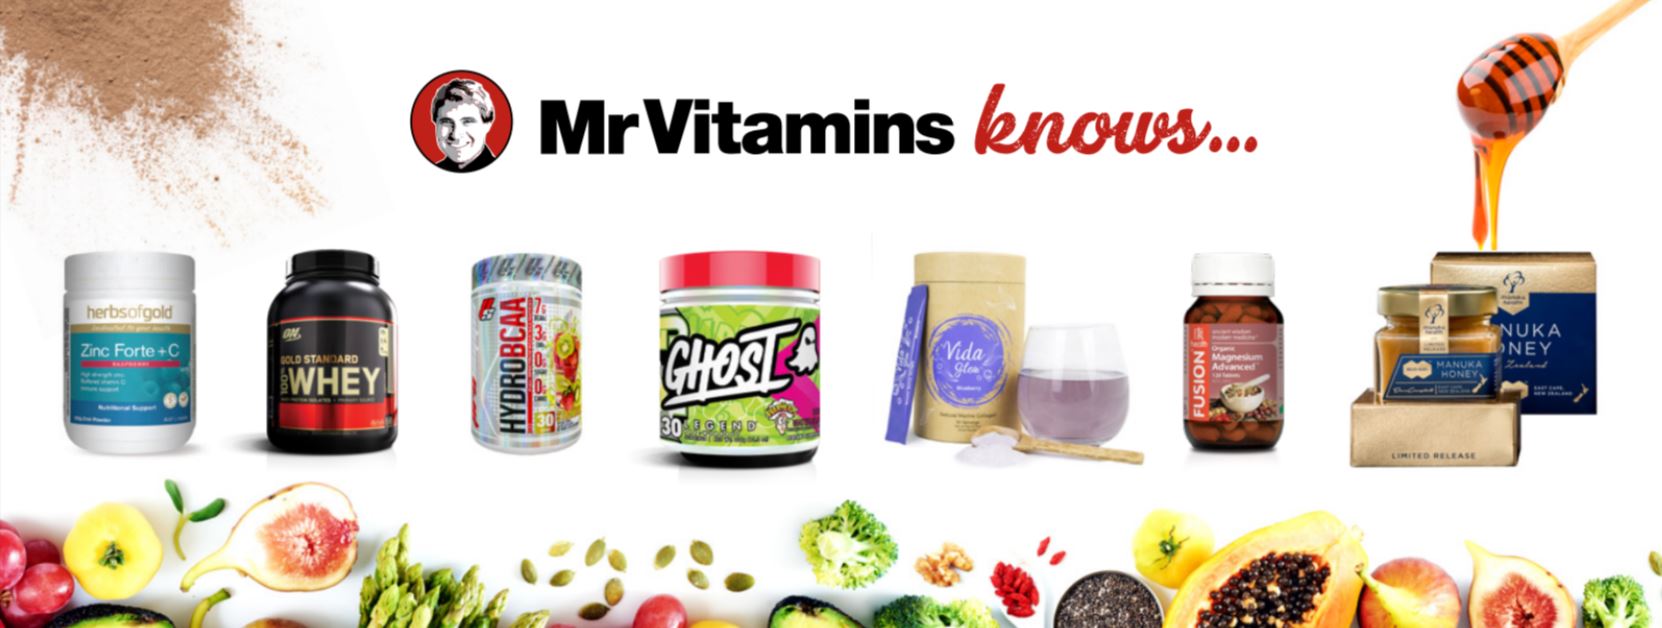 Mr Vitamins Sale - Up to 50% off BIG Brands